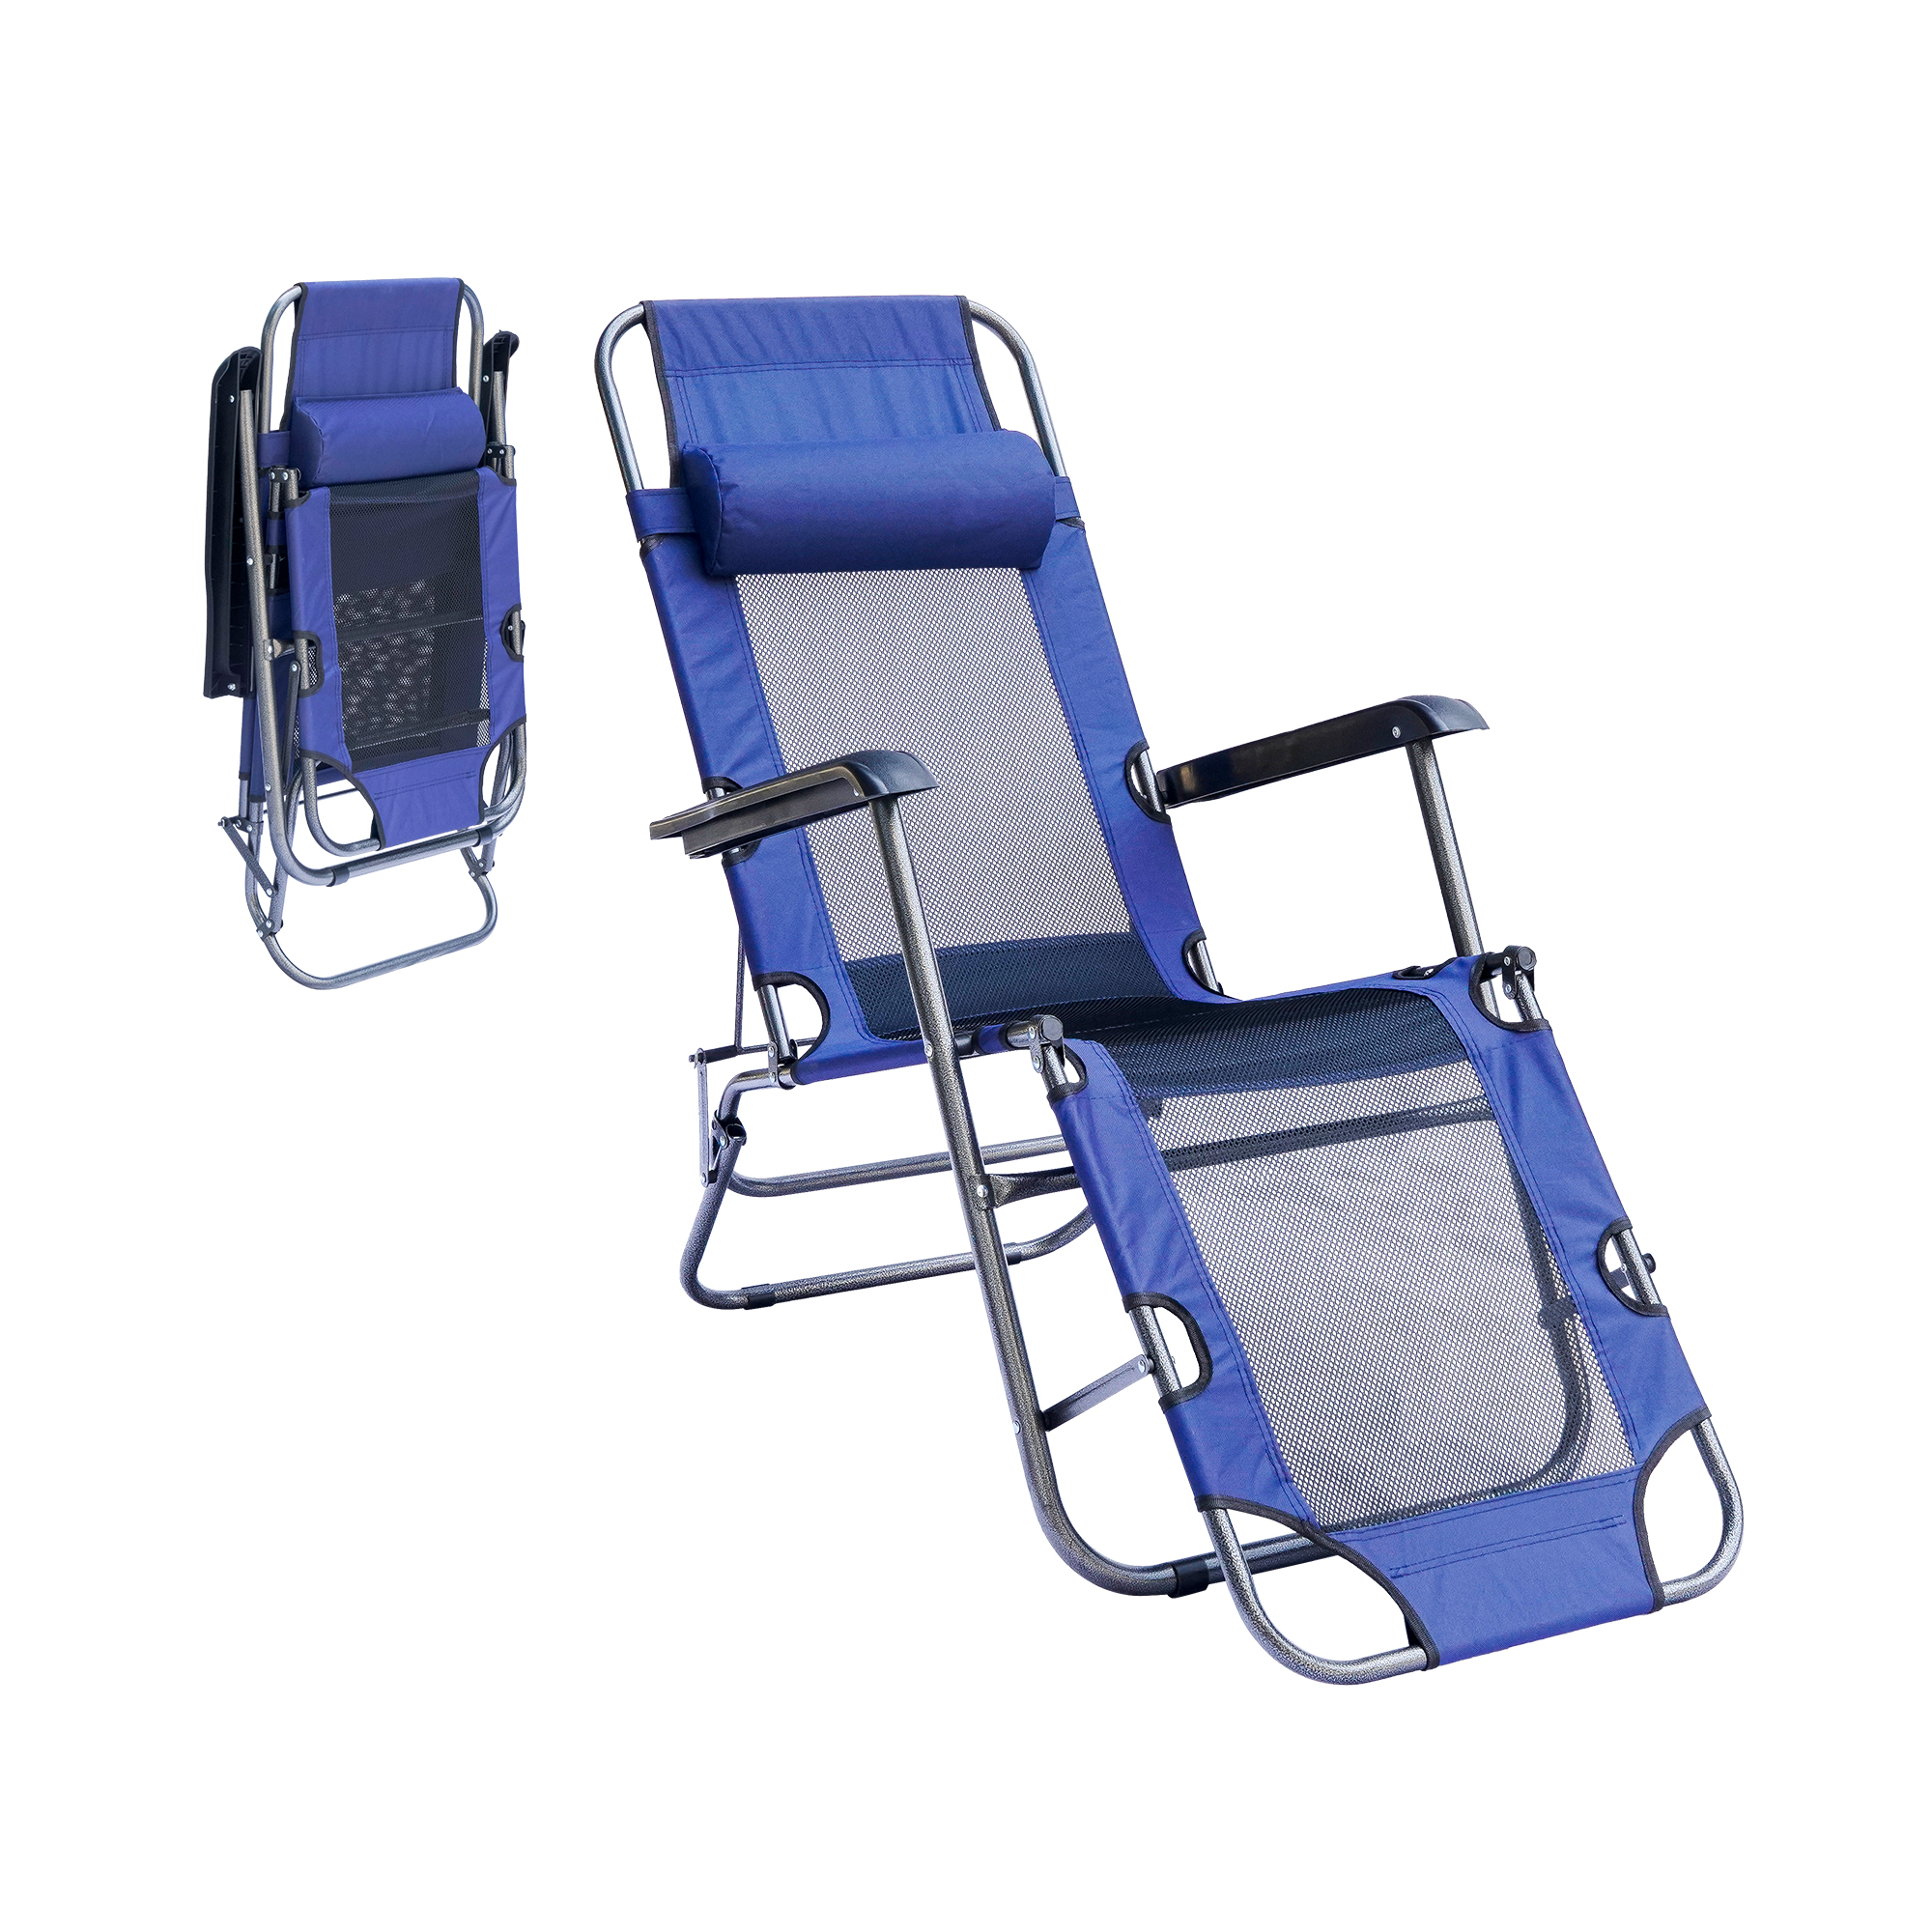 Kahoo Zero Gravity Lounge Chair Recliner Navy - image 1 of 7